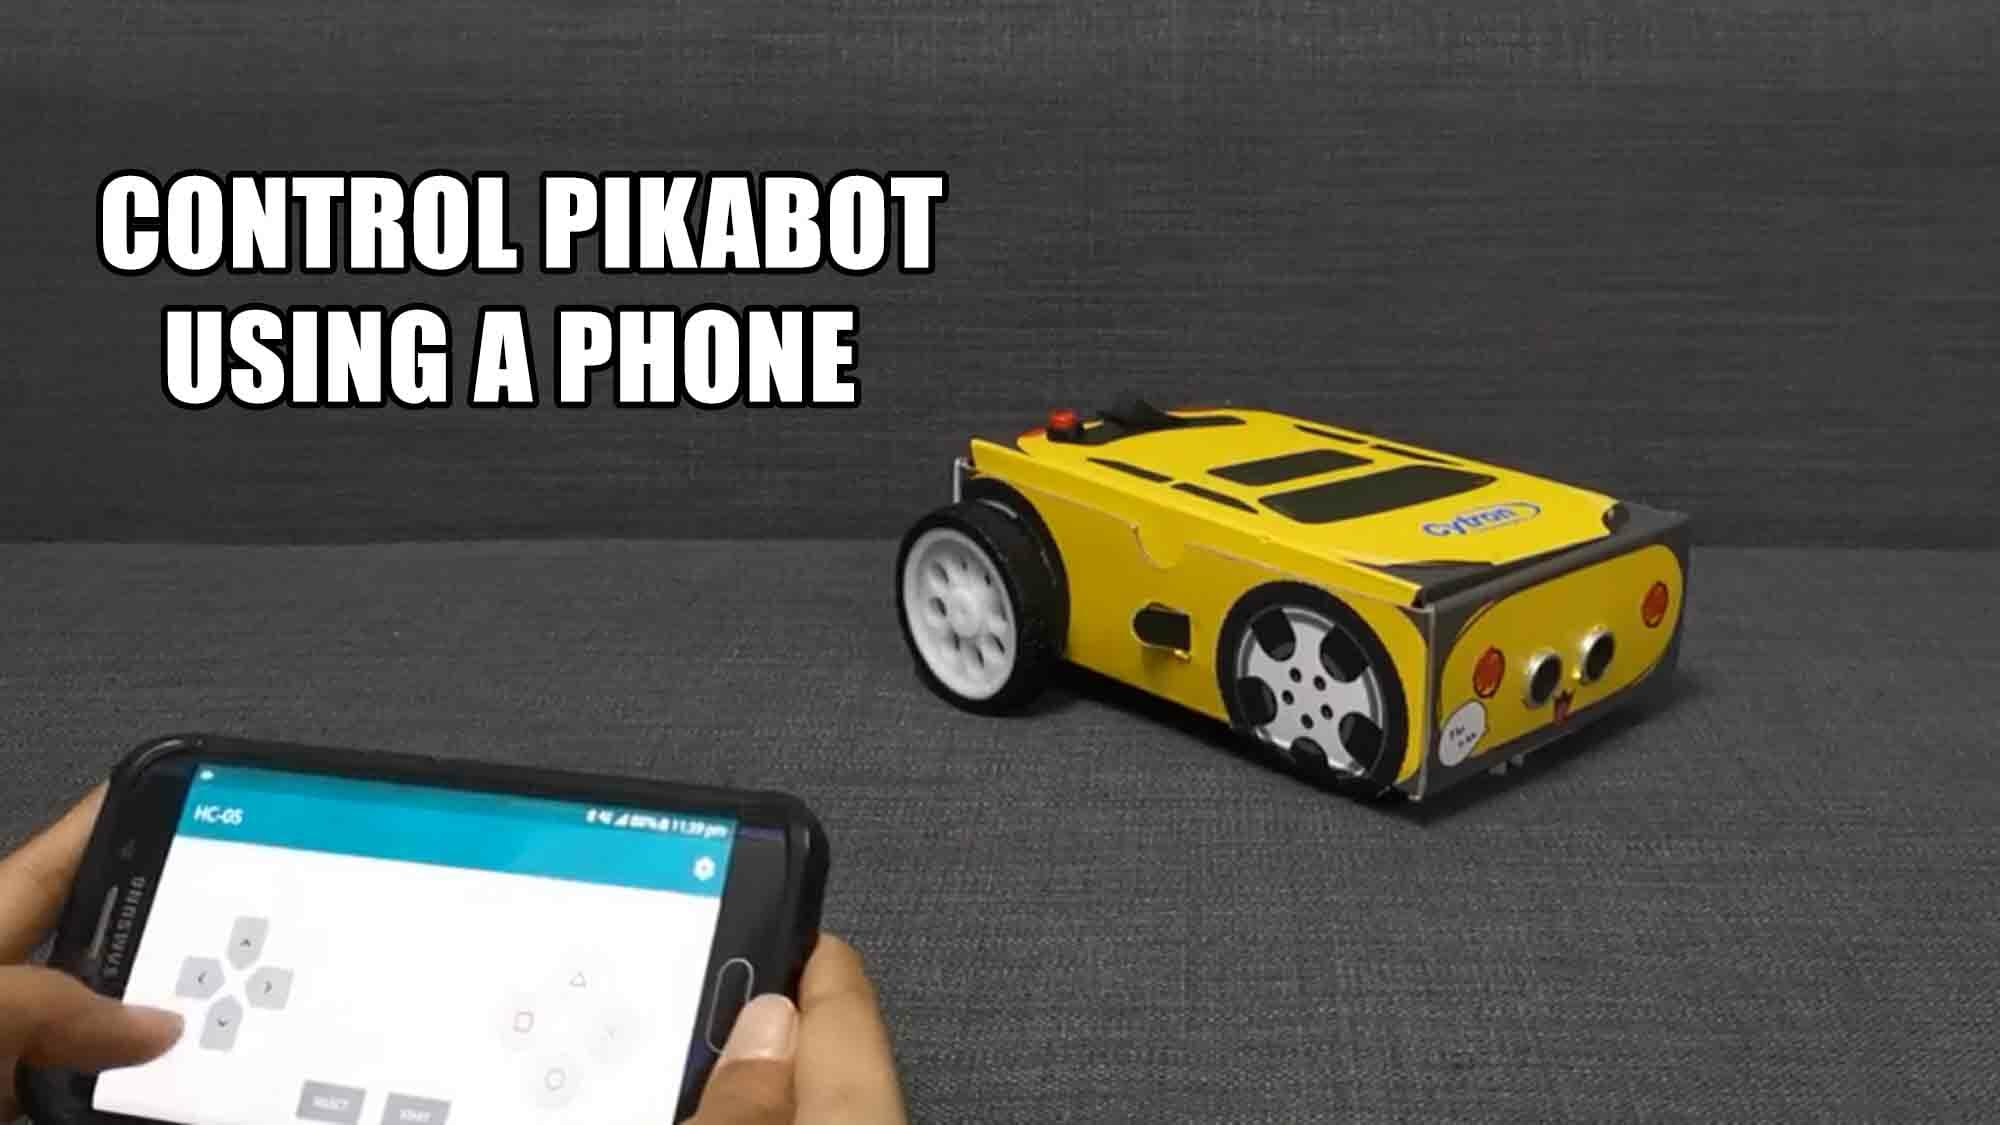 Control PikaBot Using a Phone Through Bluetooth